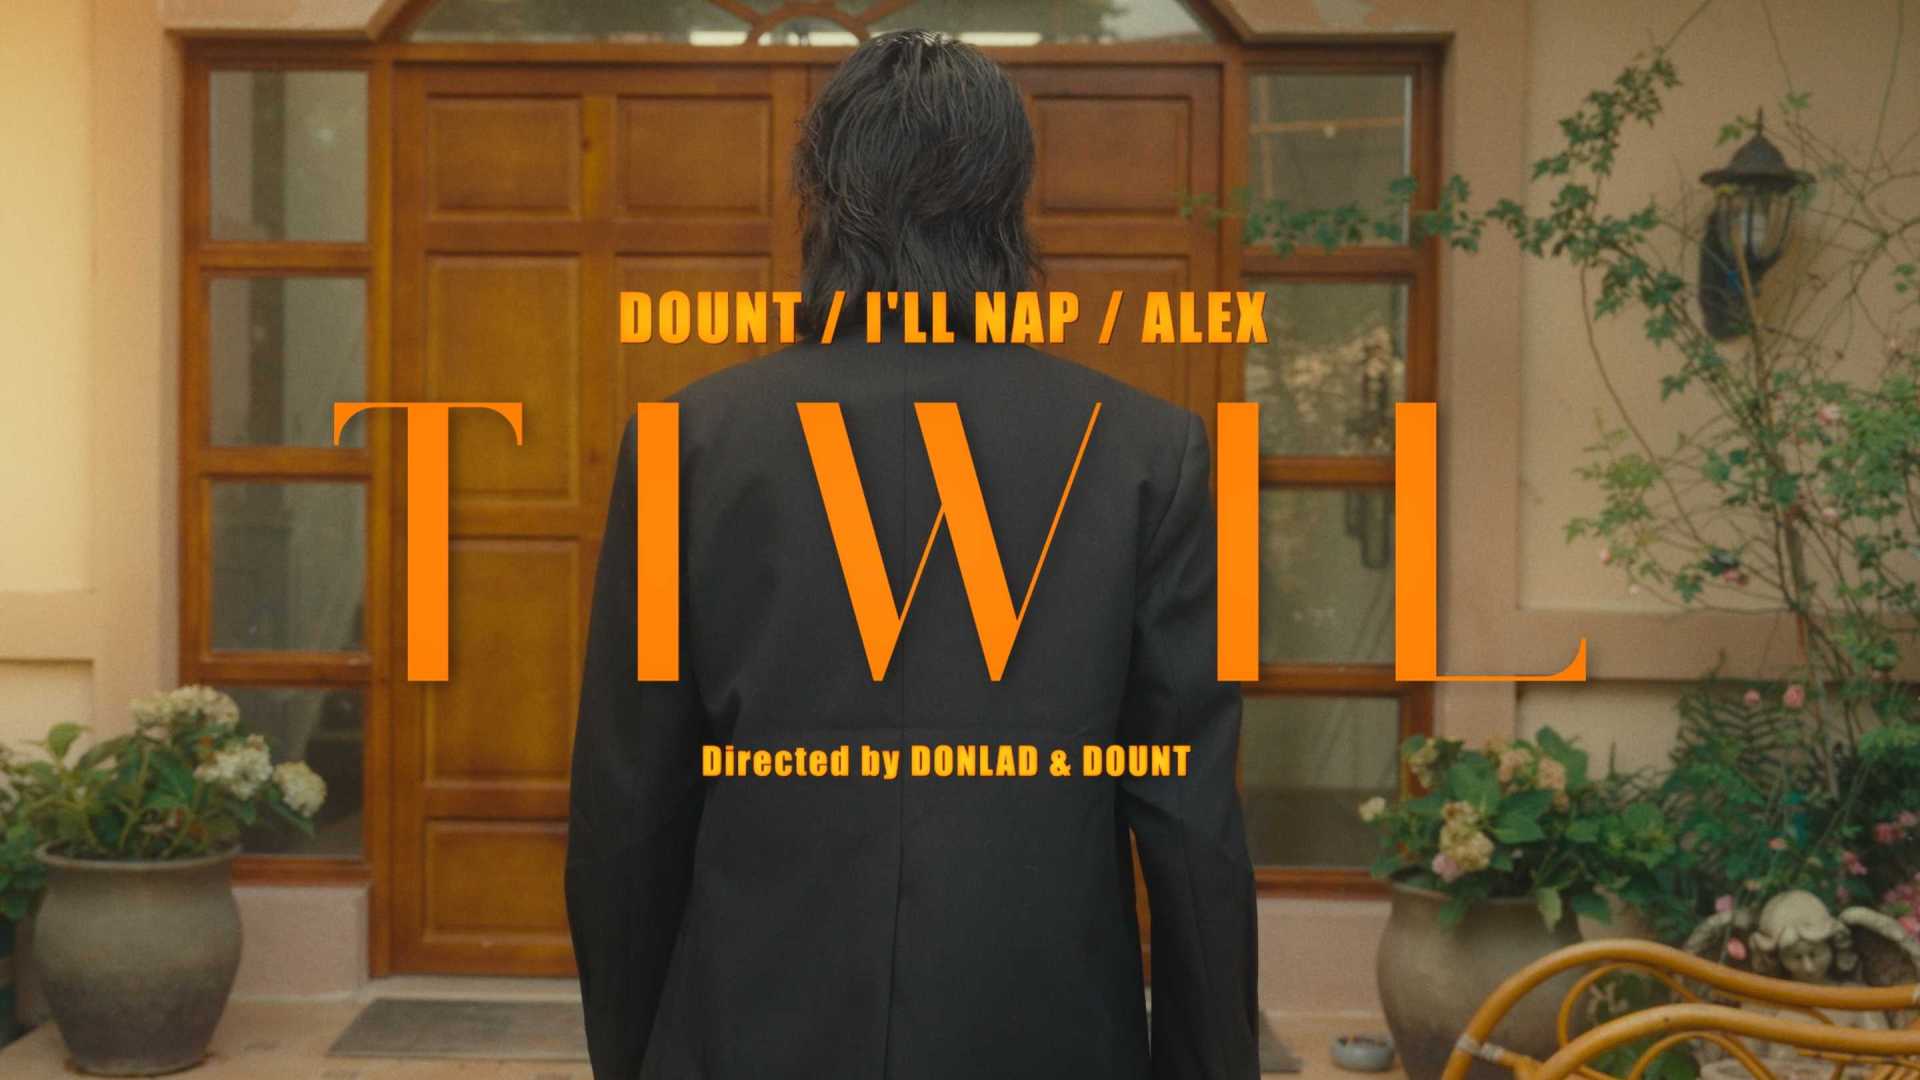 《TIWIL》（自以为是）-Dount赵乐东/I'LL NAP/阿文 完整版MV